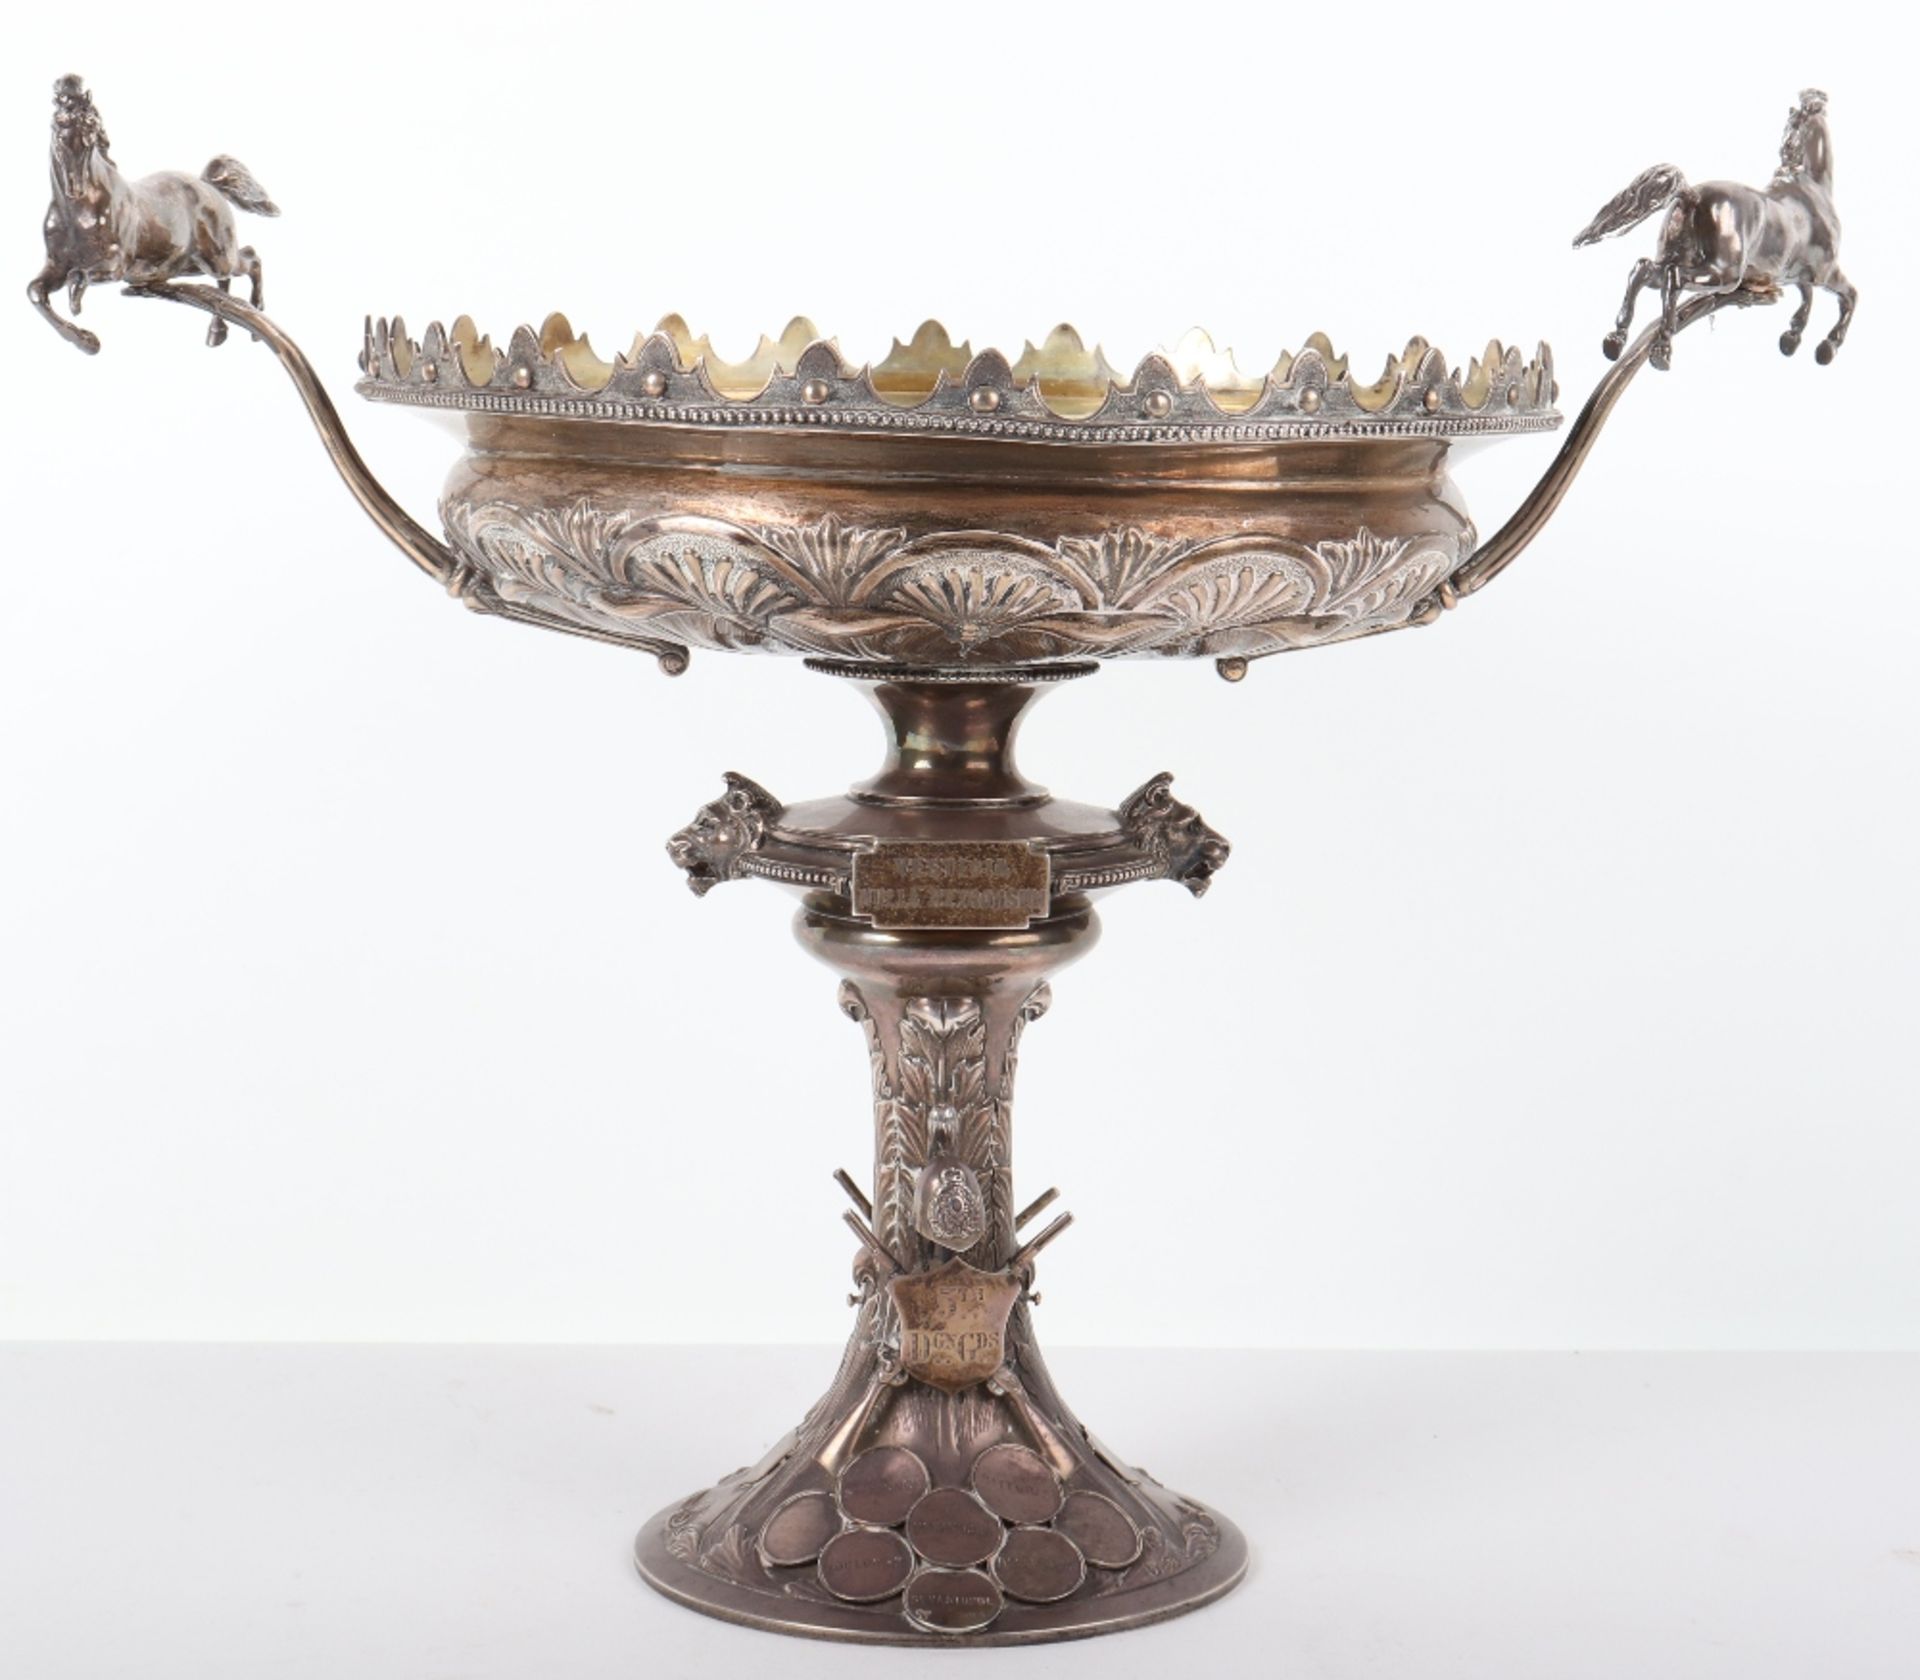 An impressive 19th century military silver tazza/centrepiece commemorating the 5th Royal Inniskilli